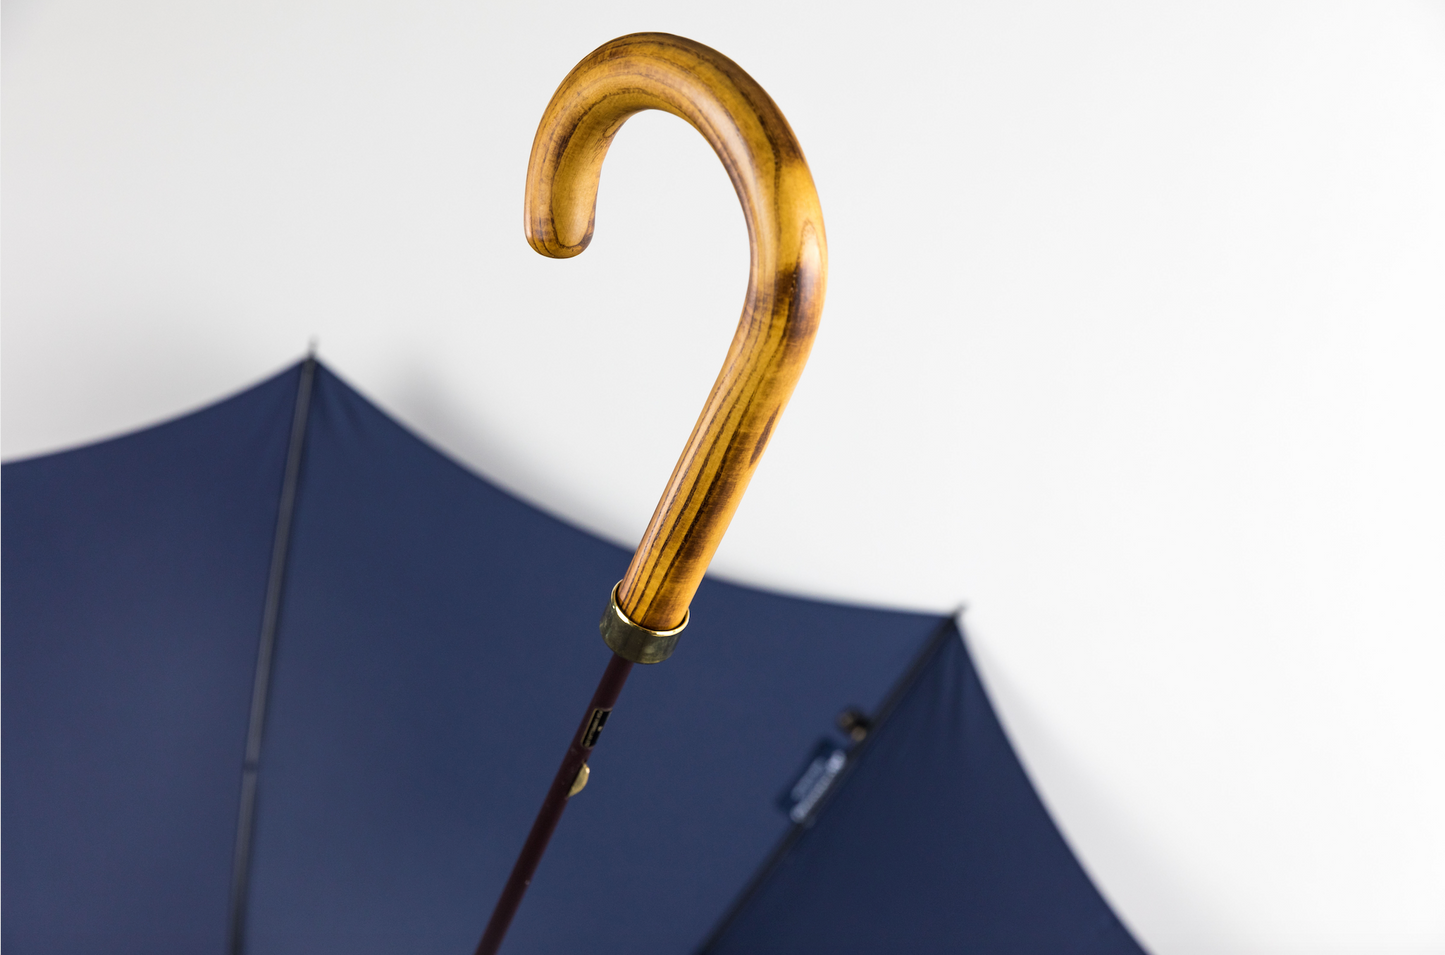 Mid Navy Umbrella